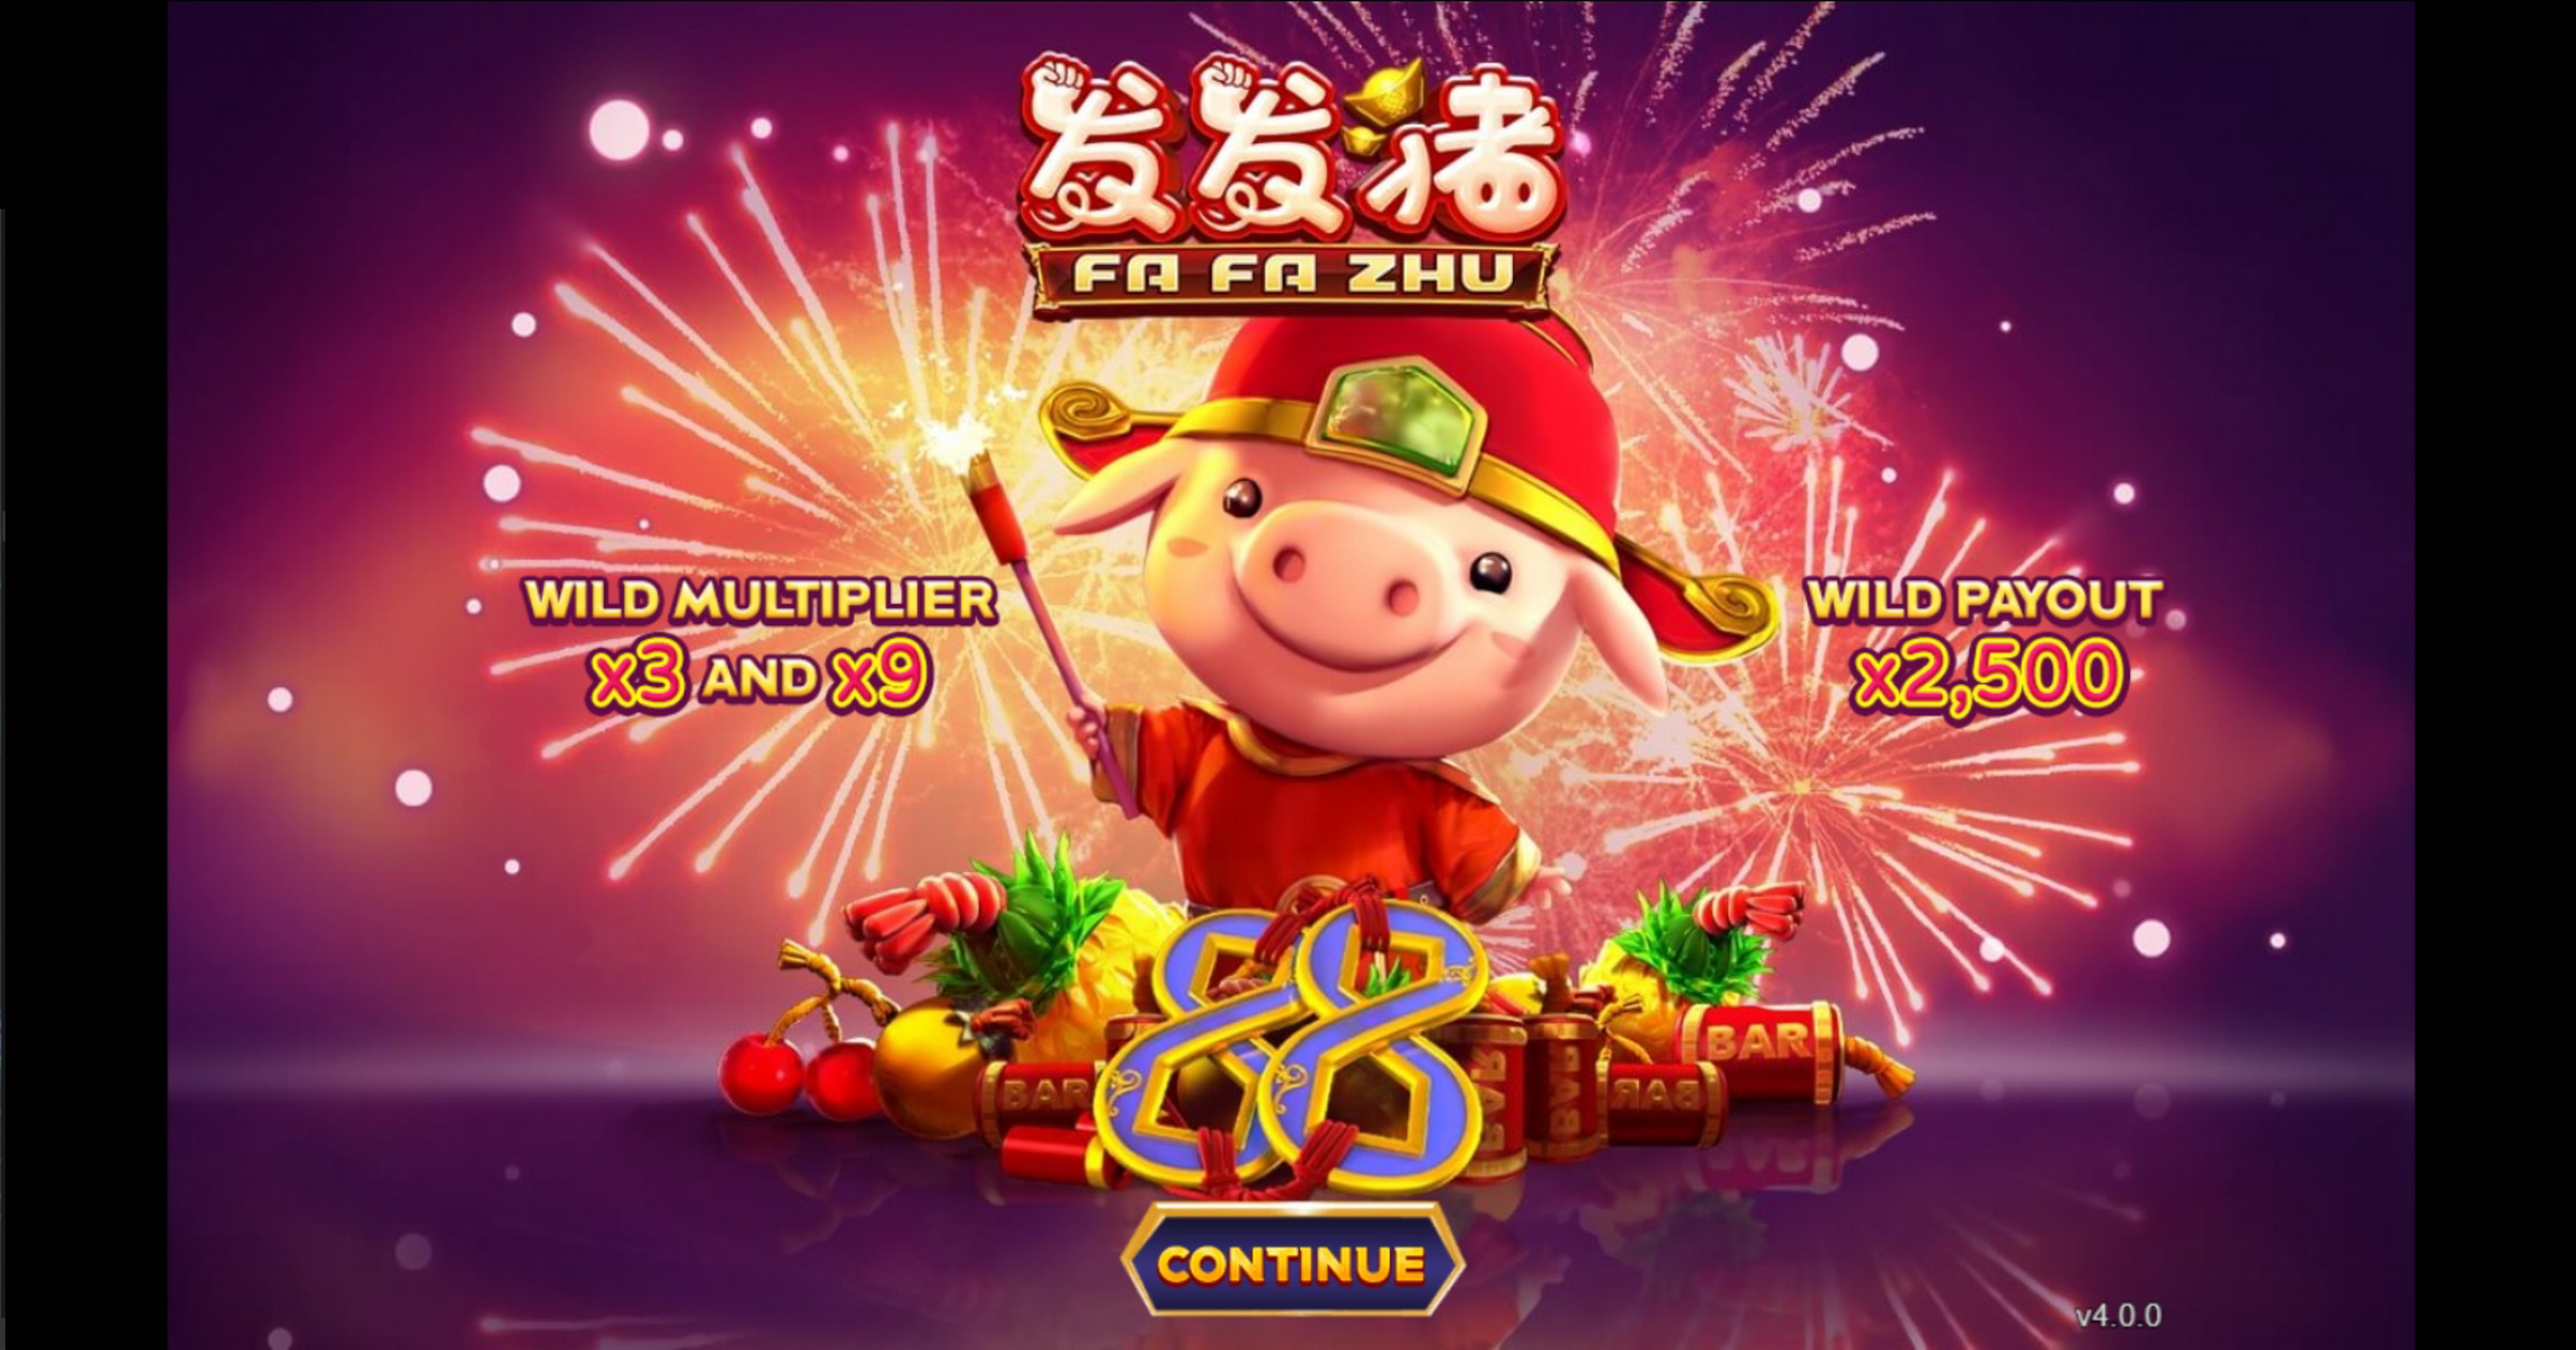 Play Fa Fa Zhu Free Casino Slot Game by Gameplay Interactive